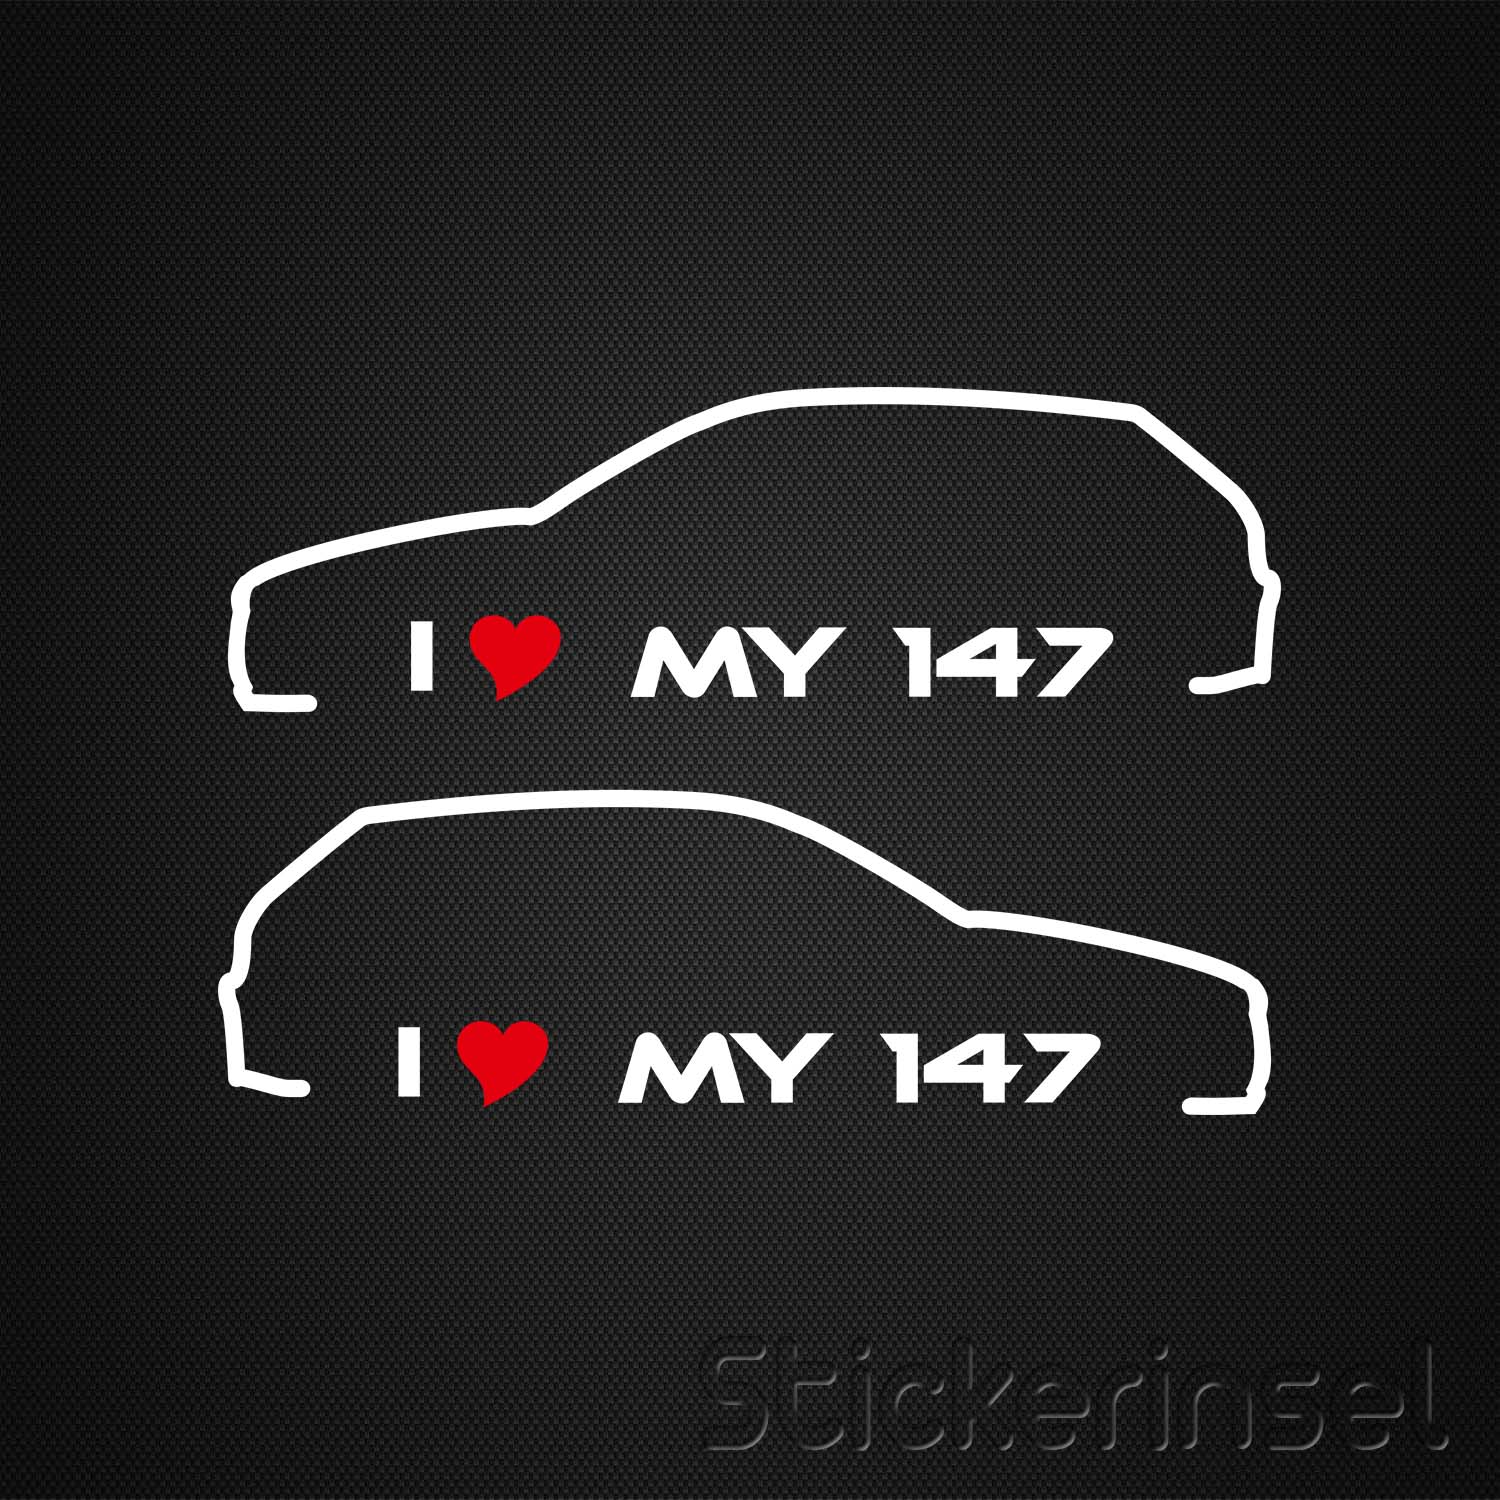 https://www.stickerinsel.at/wp-content/uploads/2015/10/Stickerinsel_Autoaufkleber-Alfa-Romeo-147-Facelift.jpg